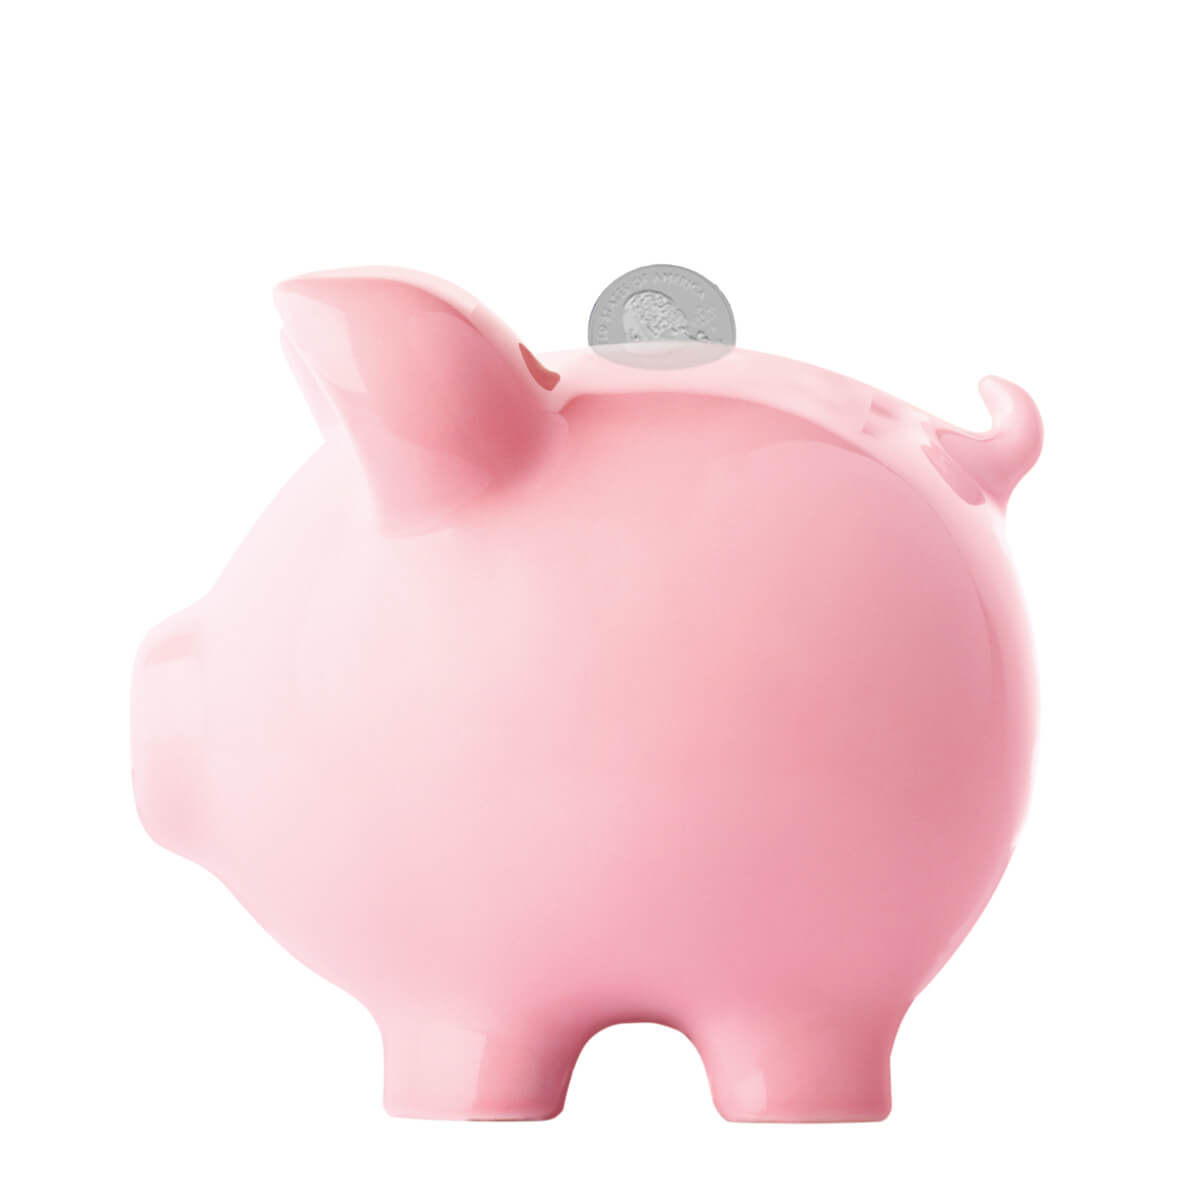 Image of a large Piggy bank representing Big Bank Accounts